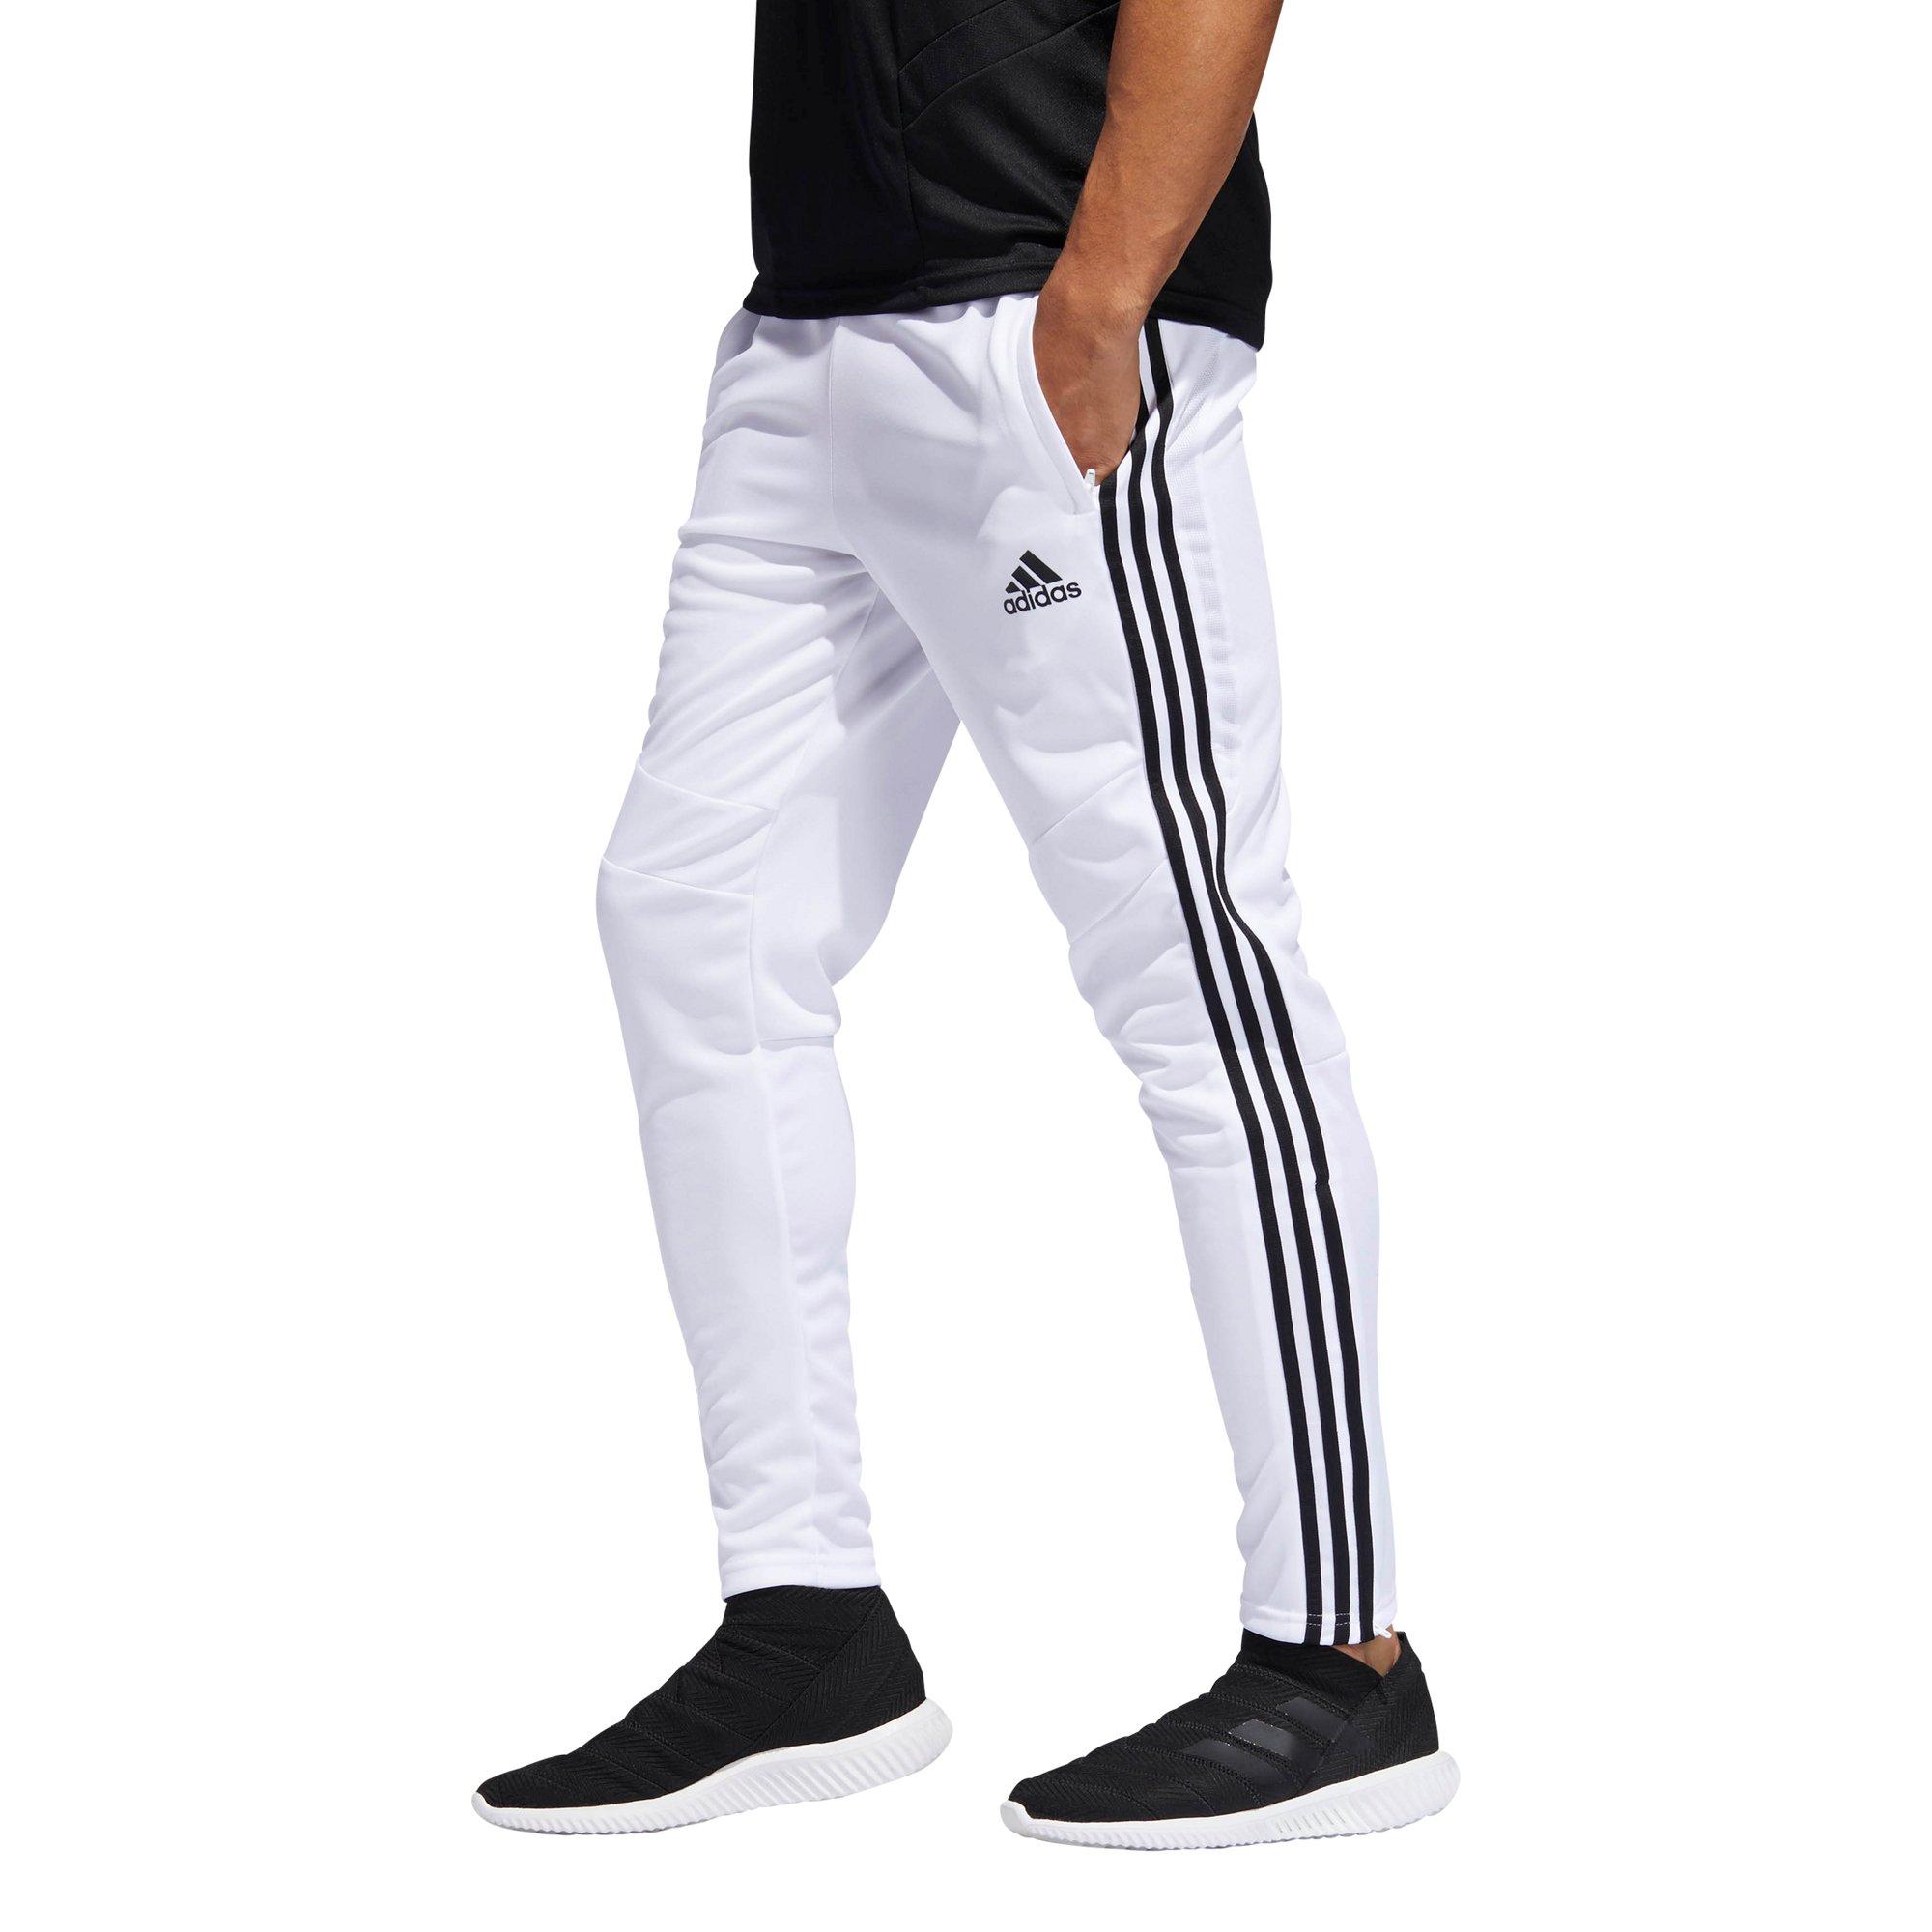 adidas pants mens white